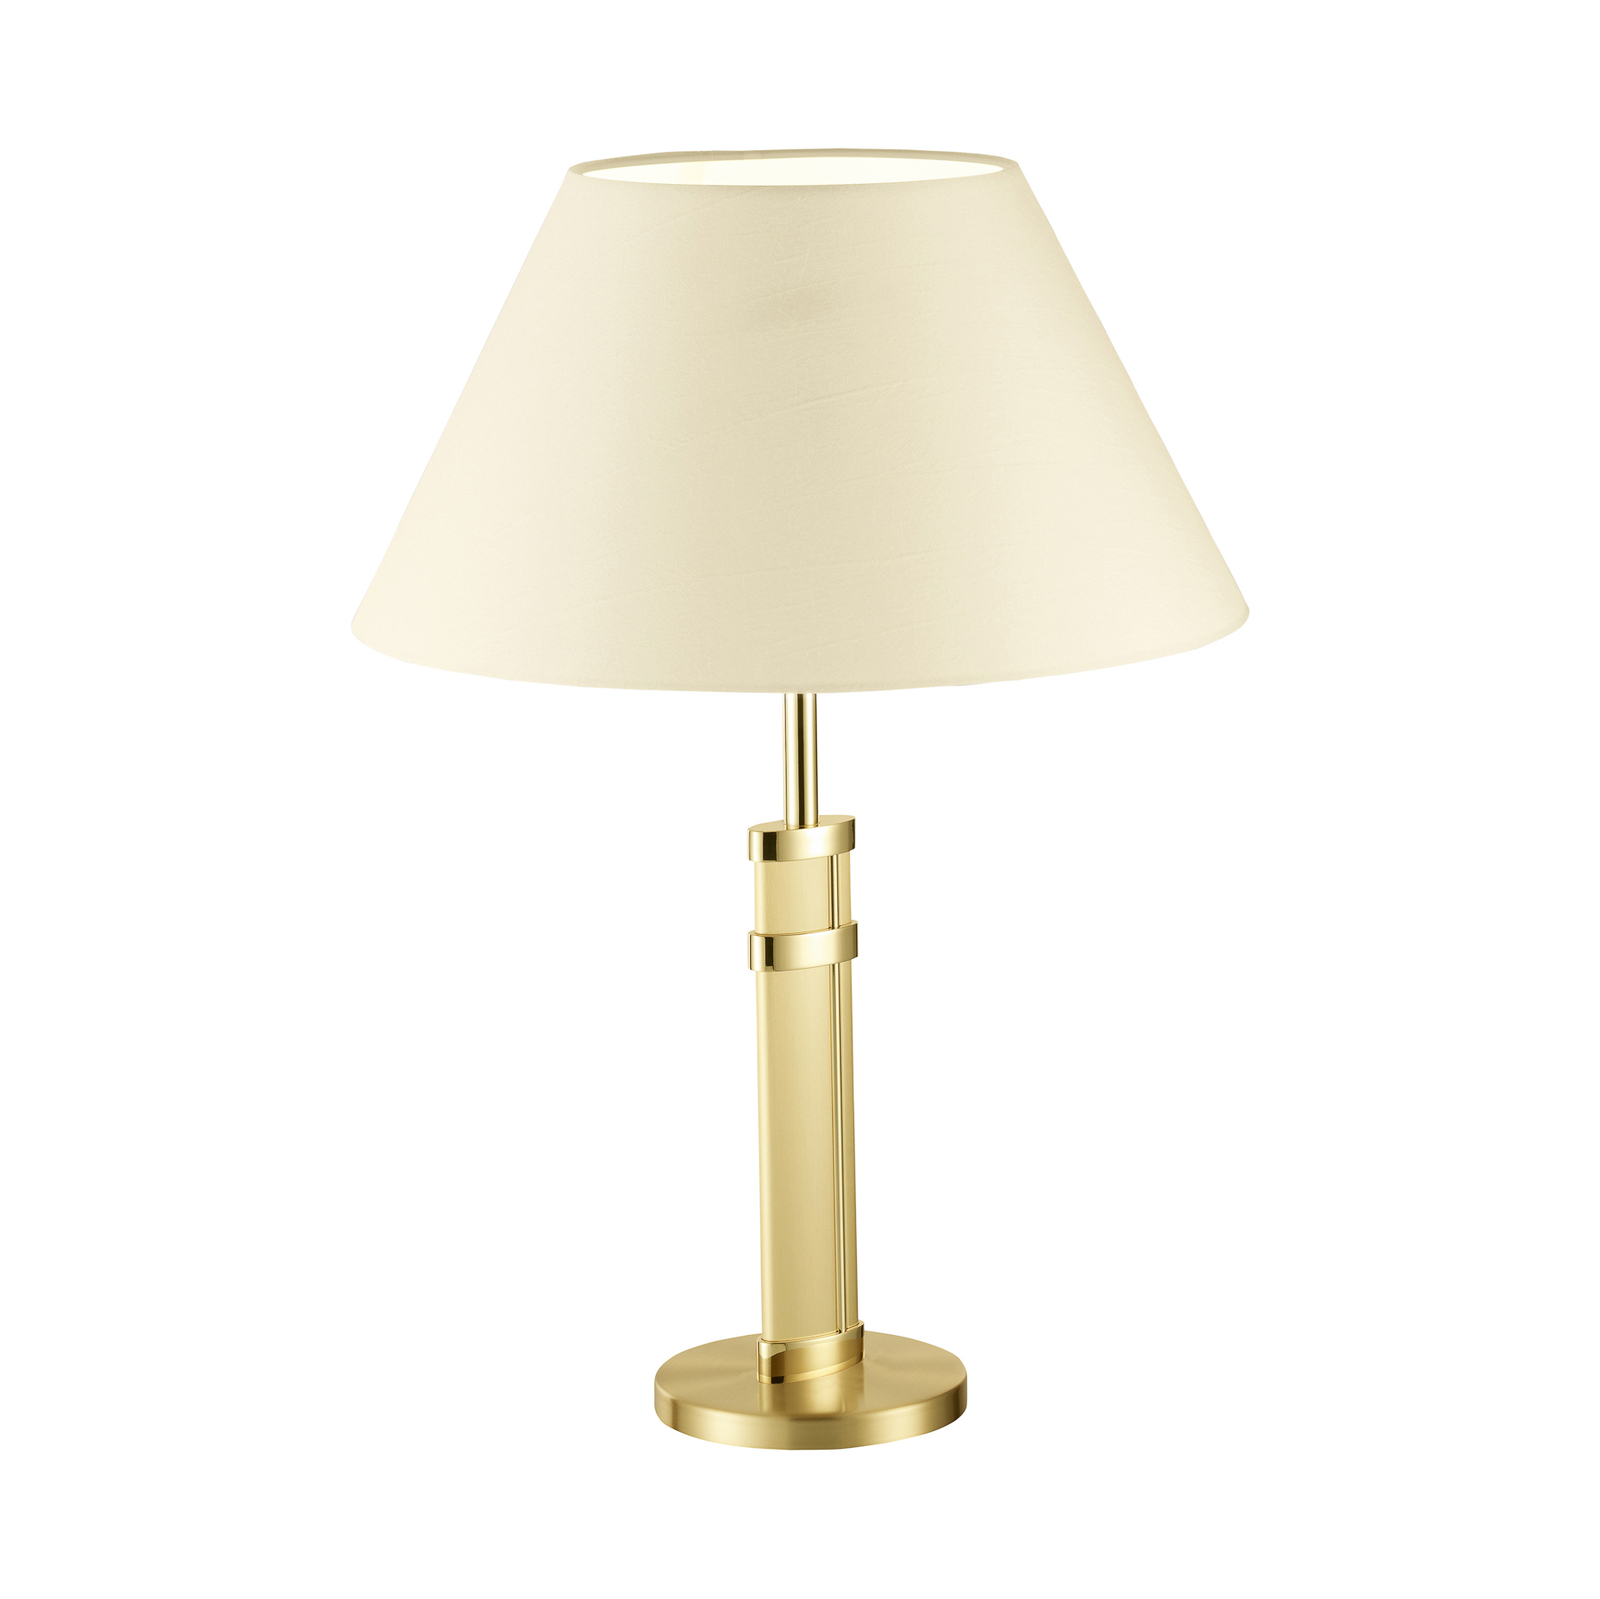 B+M LEUCHTEN Seda bordslampa, höjd 56 cm